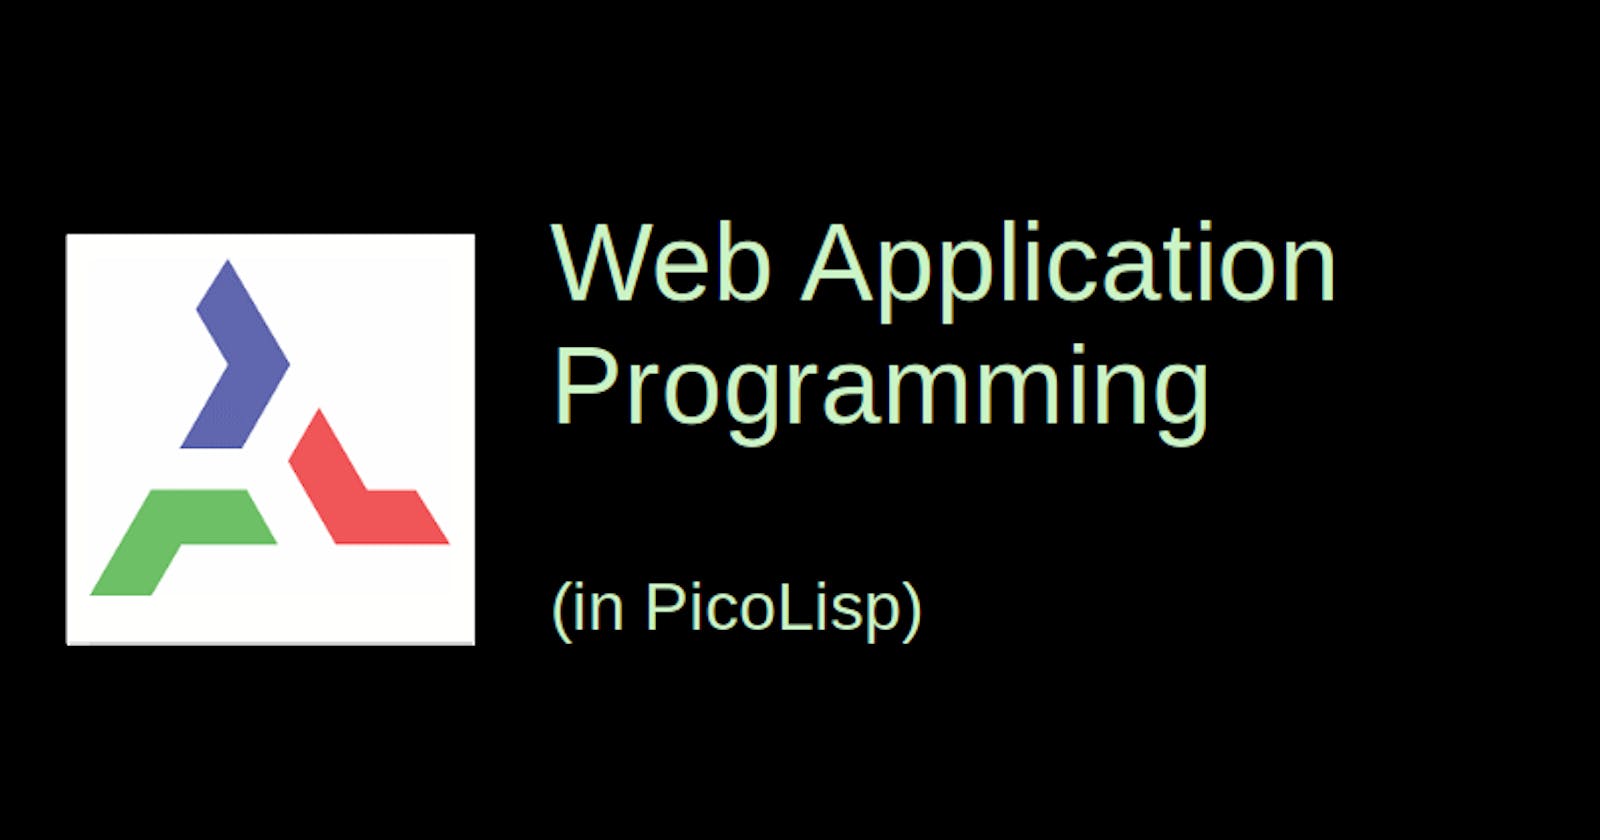 Web Application Programming in PicoLisp